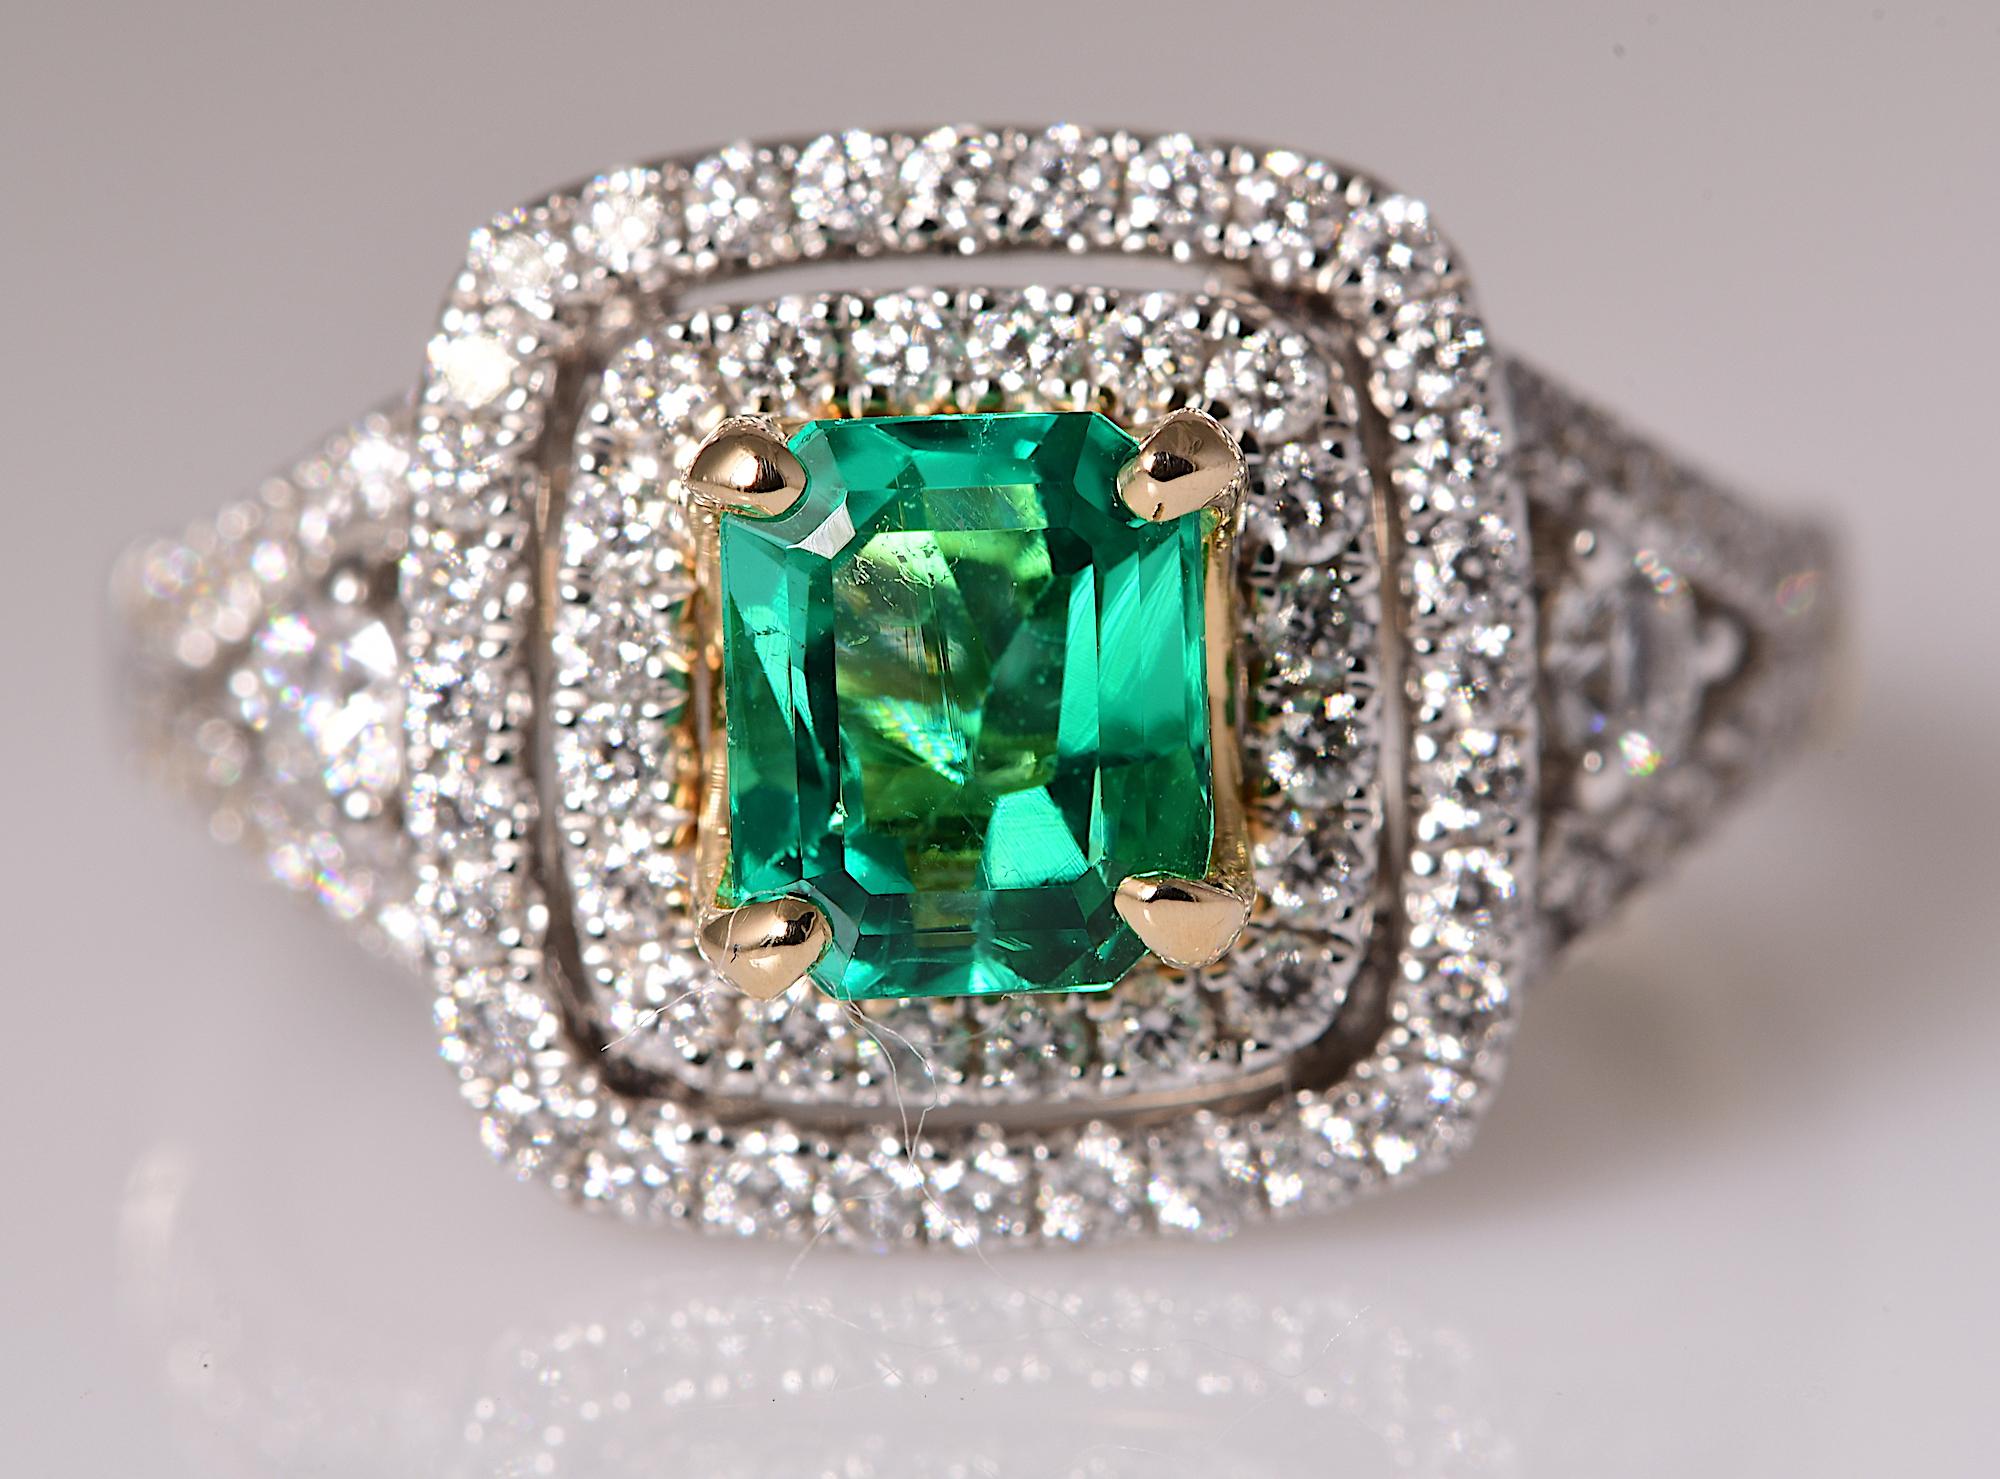 Natural Emerald 1.14 & Natural Diamond .87 Emerald Cut Halo White Gold 14K Ring

Era: Modern
Main Stone: Natural Emerald   TCW:  1.14   Clarity: VS1   Shape: Emerald Cut
Secondary Stone: Natural Diamond   TCW: .87   Color: GH   Clarity: SI1-I1  